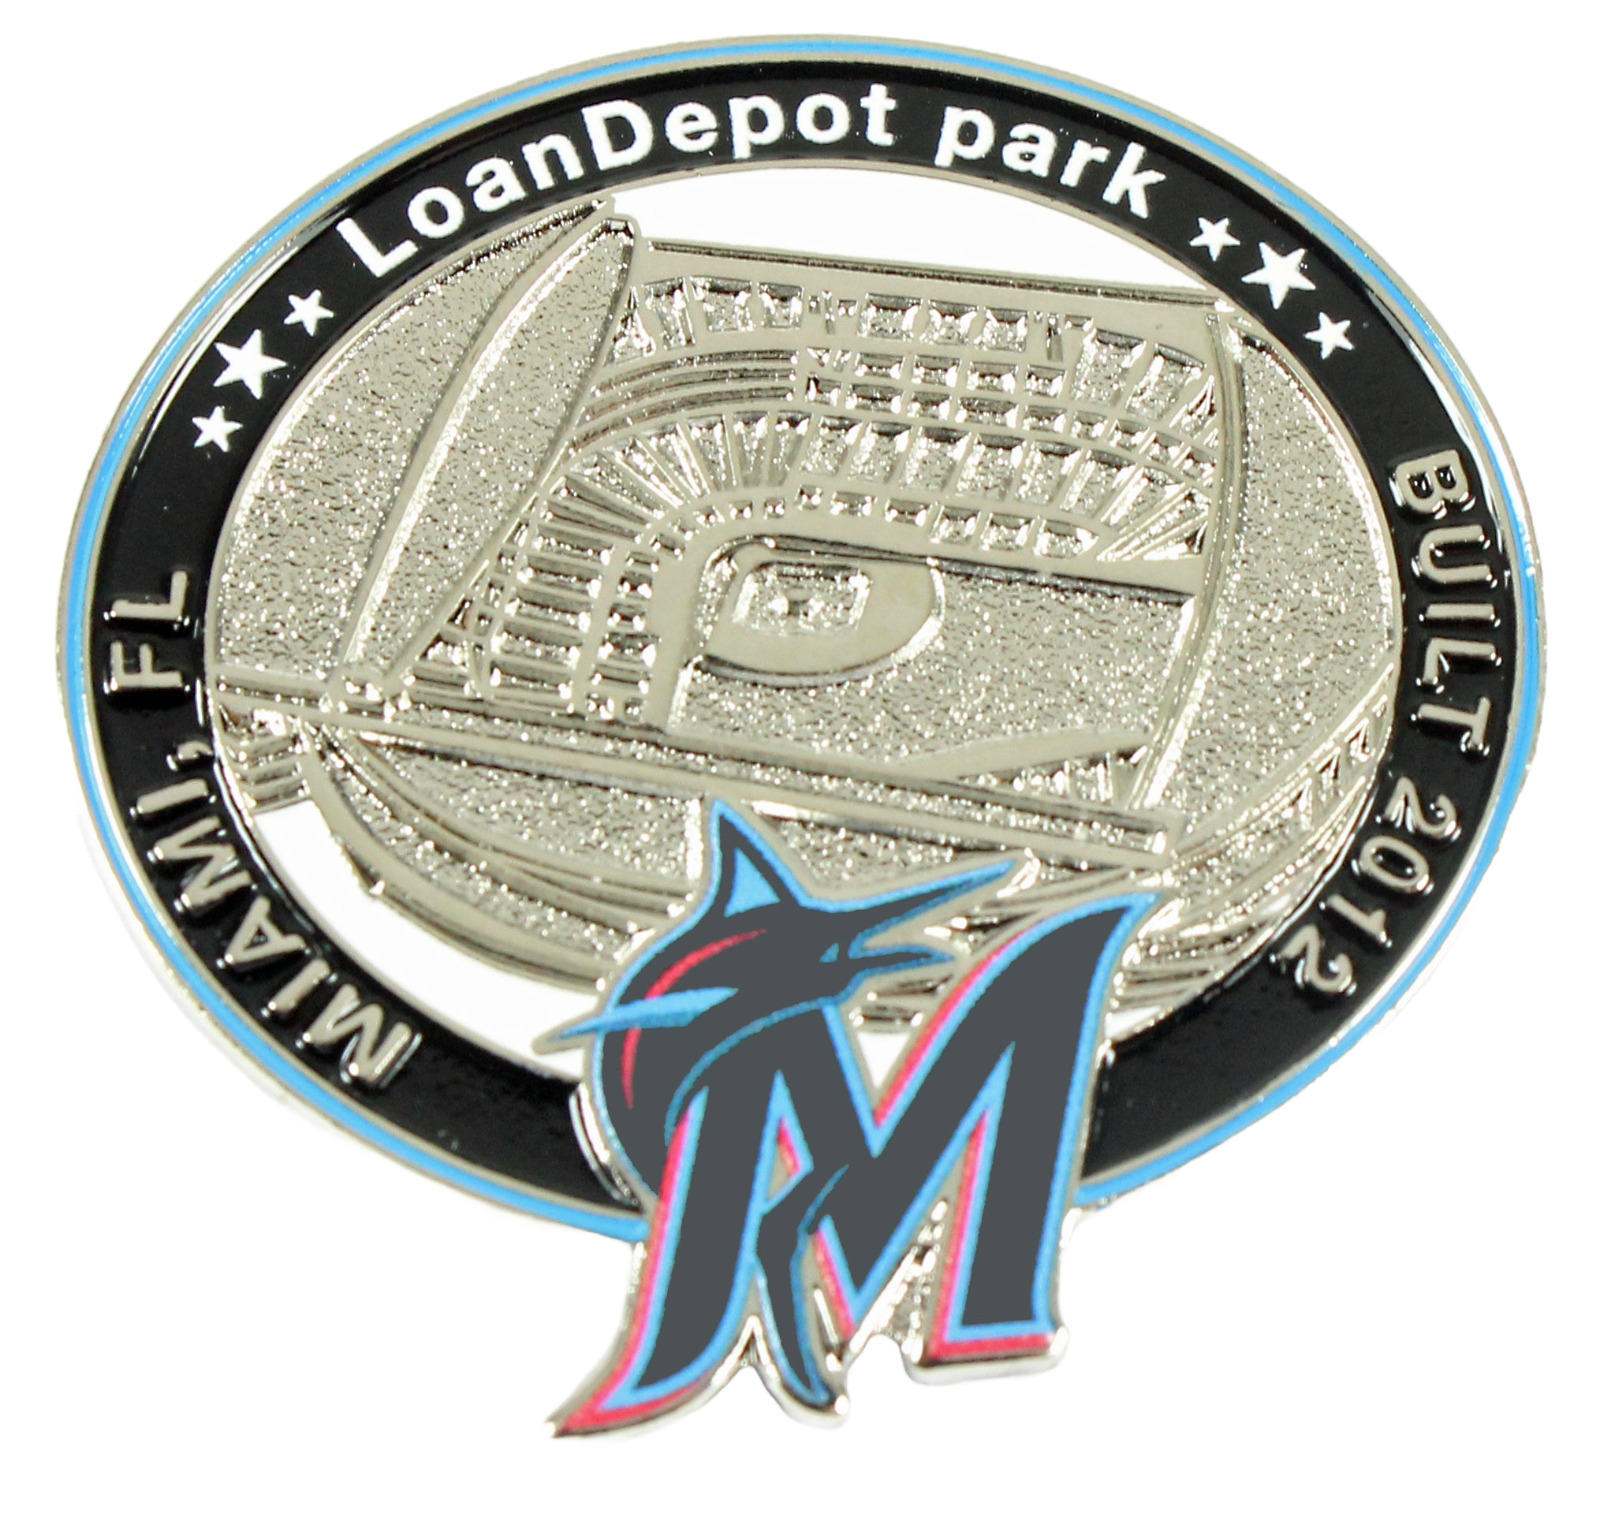 LoanDepot Park Pin - Miami, FL / Built 2012 - Limited 1,000